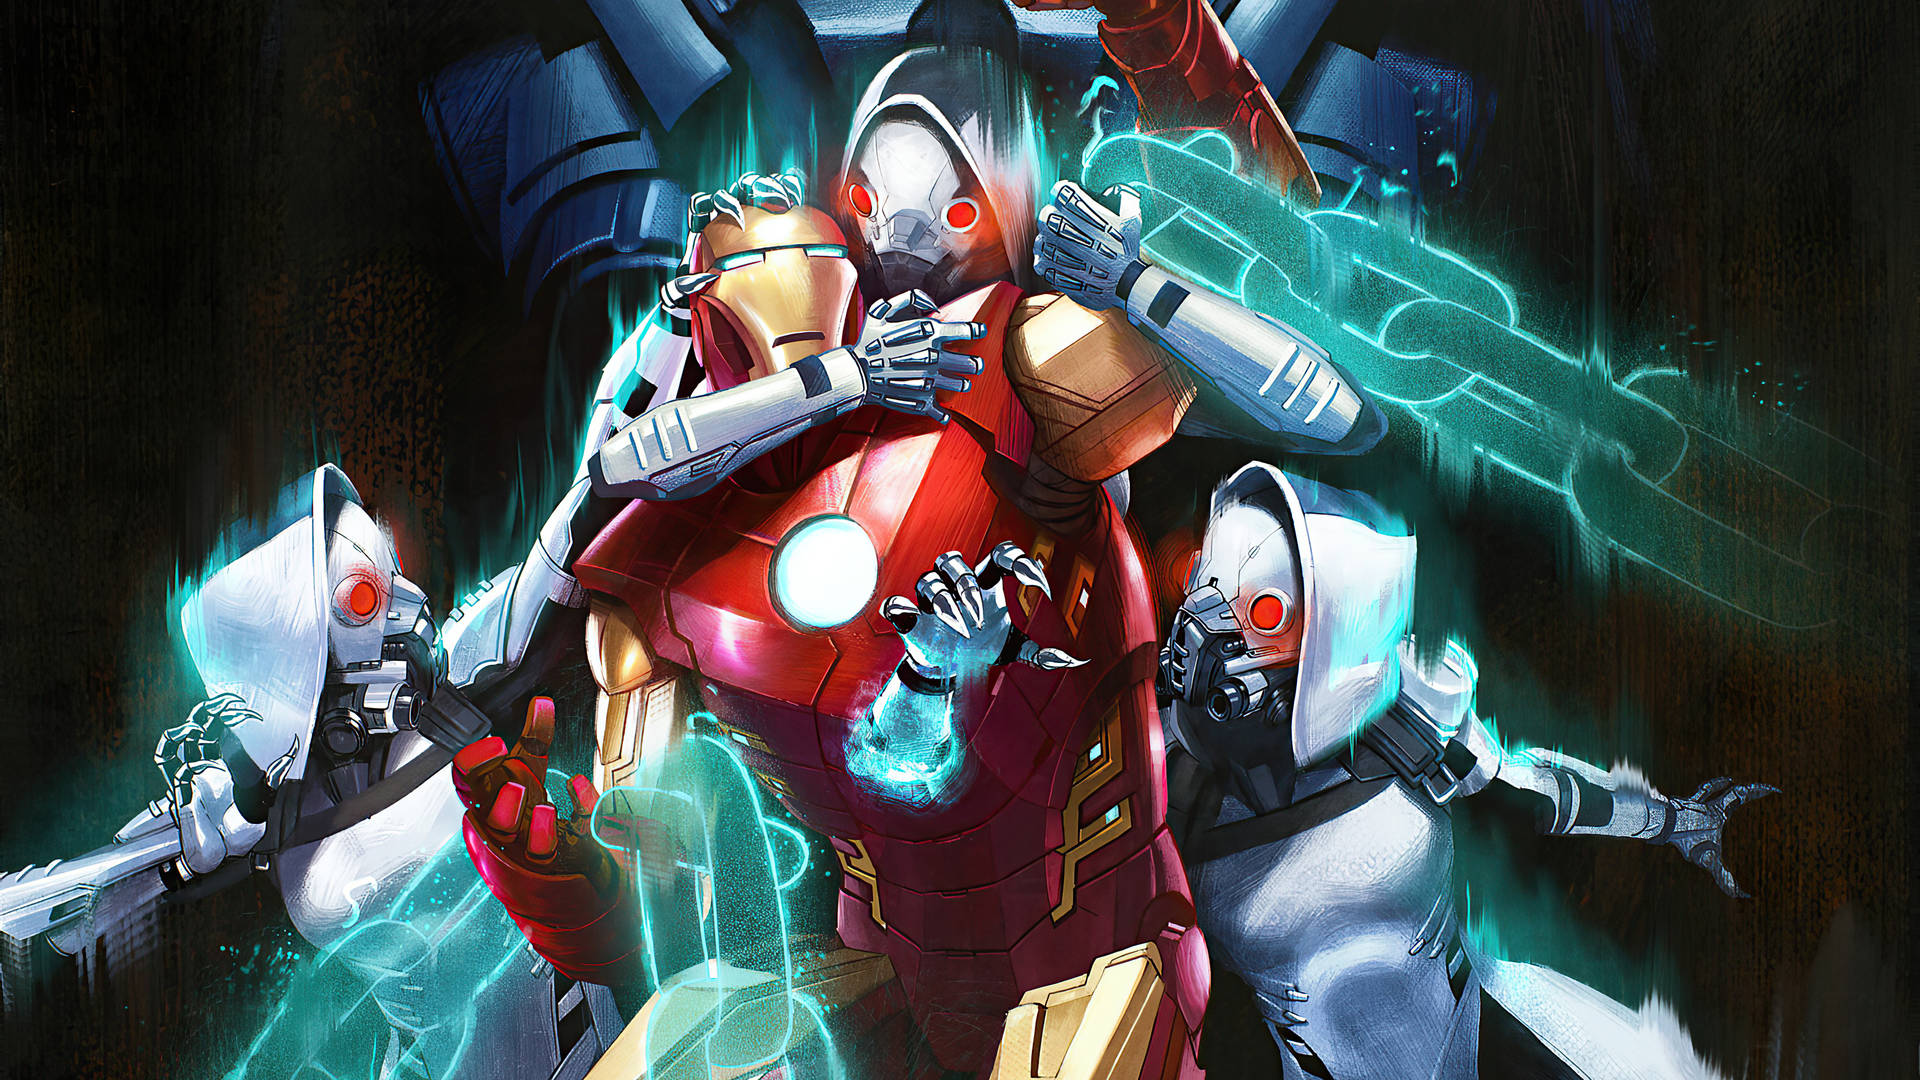 Cool Iron Man Vs Ghost Artwork Background